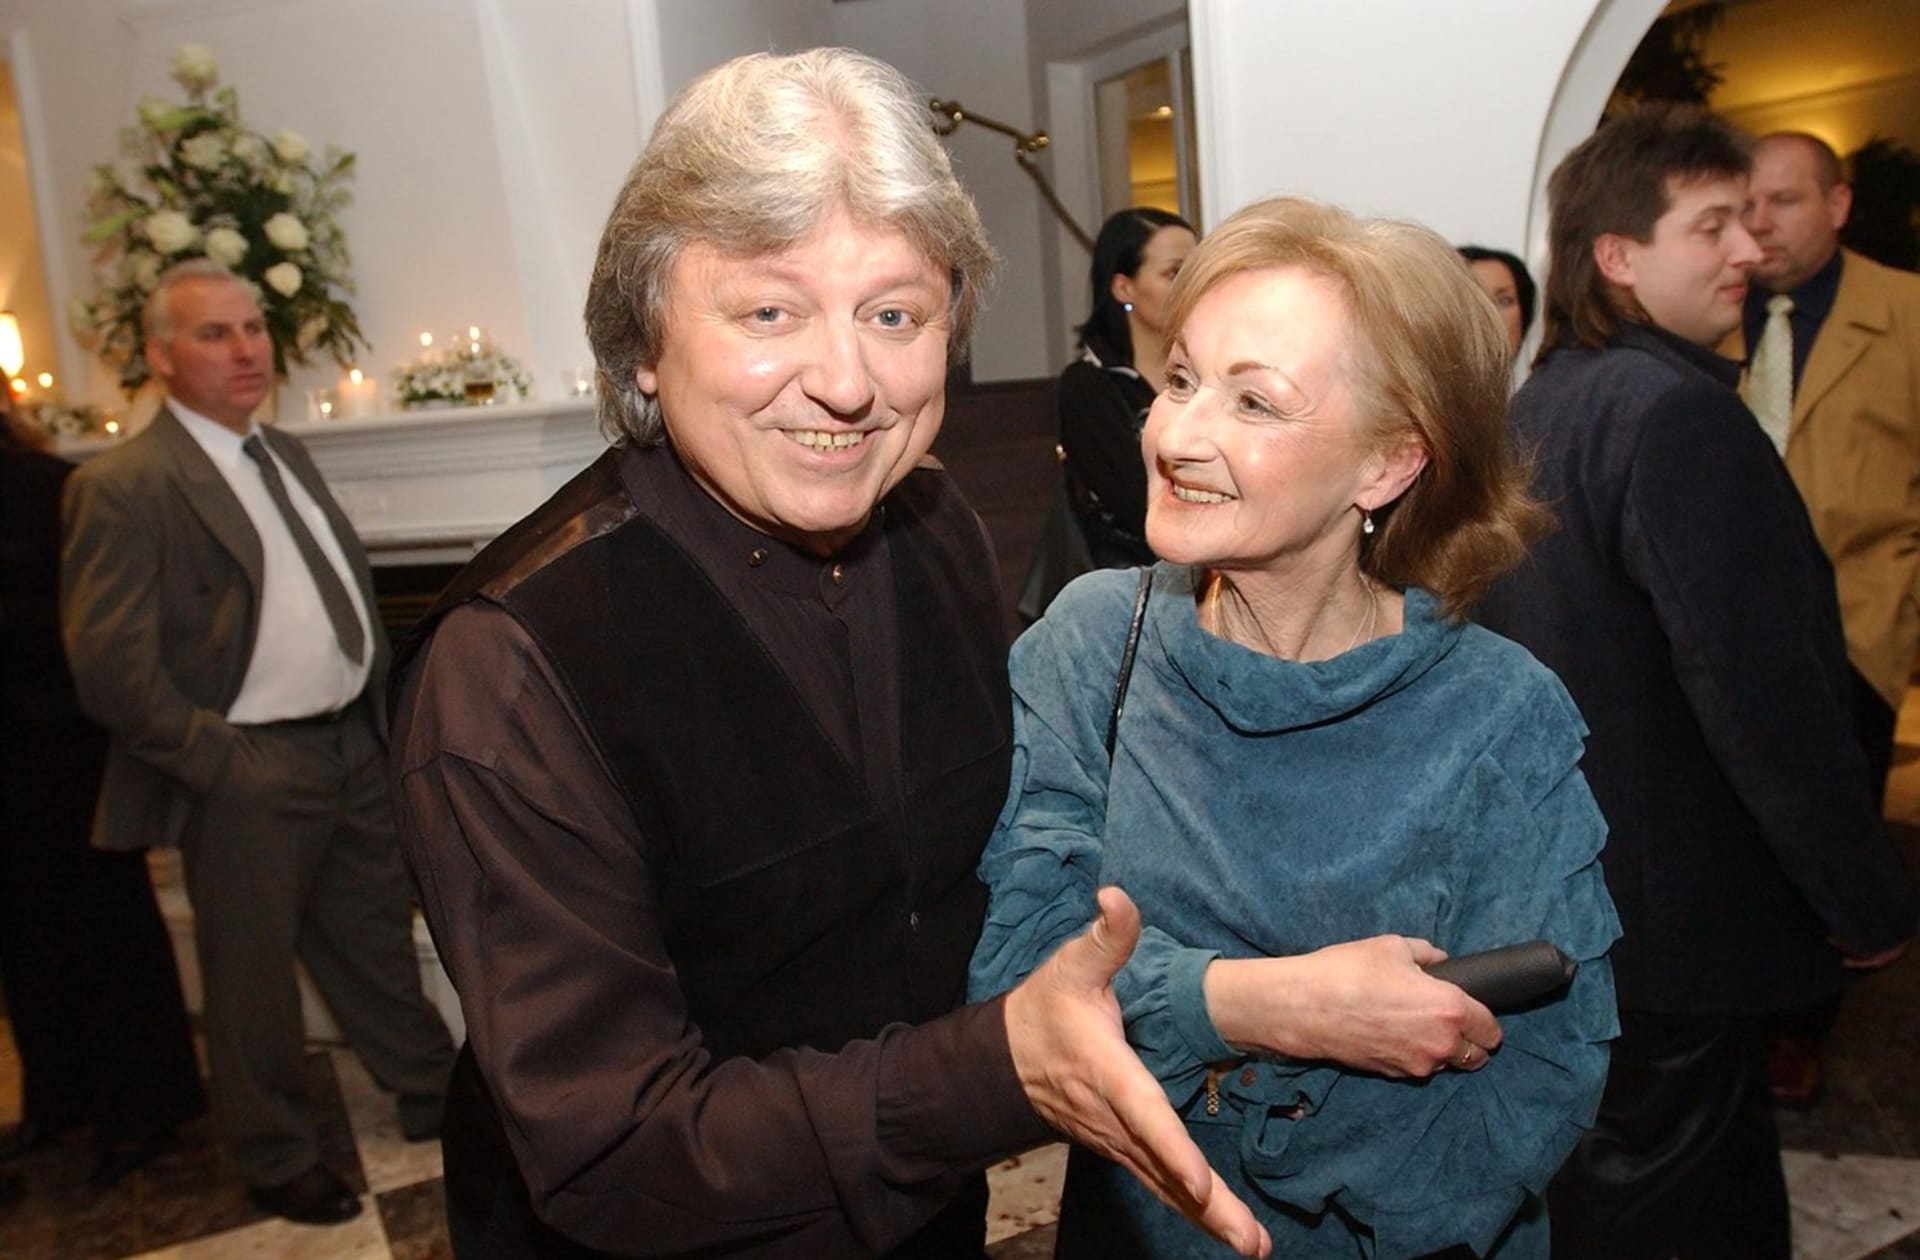 S manželkou Jaroslavou se brali v roce 1974 a narodil se jim syn Václav. Po celou dobu je pojil krásný vztah.